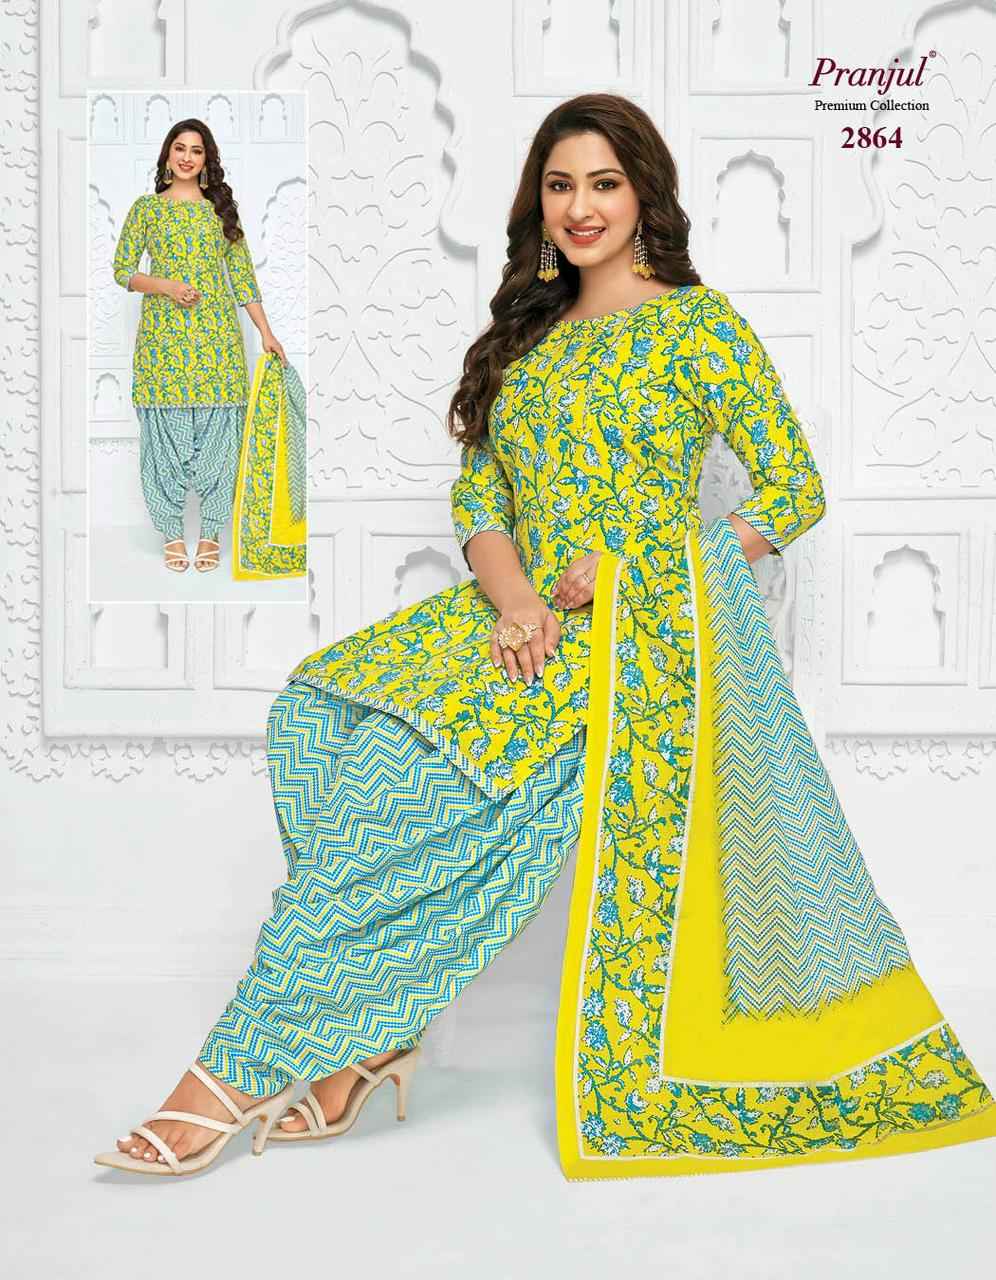 Free Size Multicolor Readymade Patiyala Dress Pranjul Priyanka Vol 11,  Size: M, L, XL, XXL at Rs 500/piece in Surat